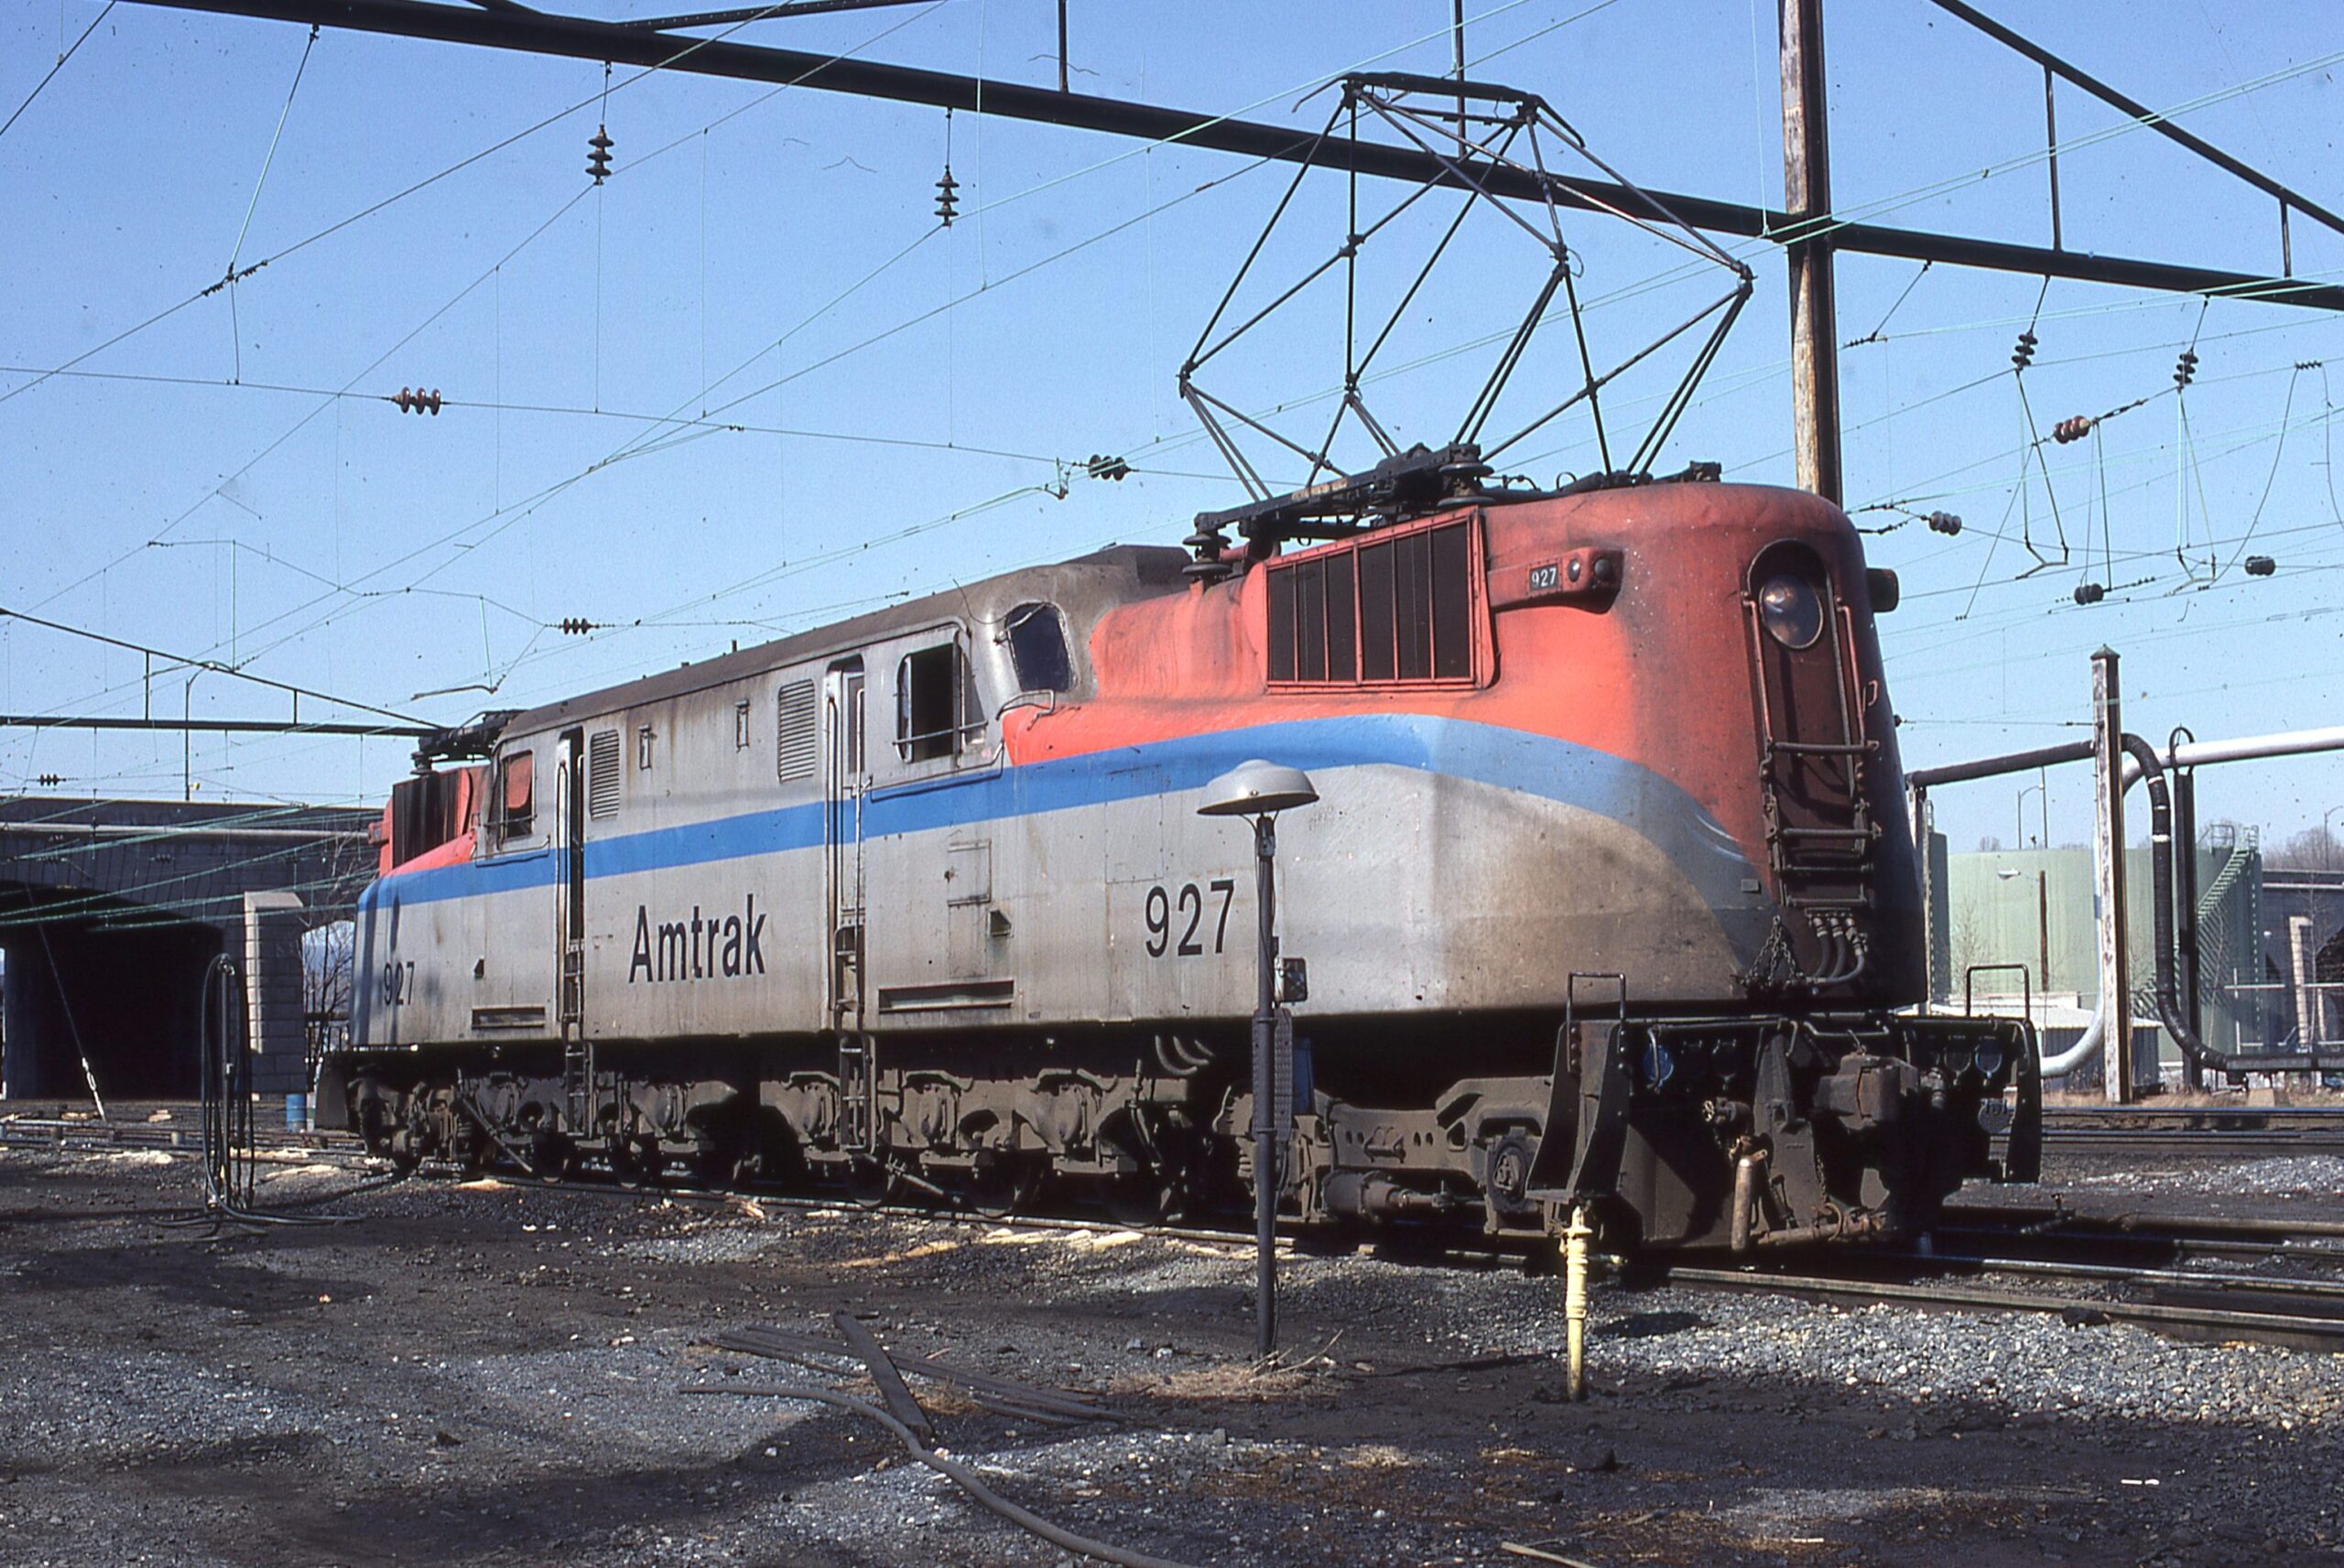 Amtrak | Harrisburg, Pennsylvania | GG1 927 | Red / Silver mist scheme | April 21, 1979